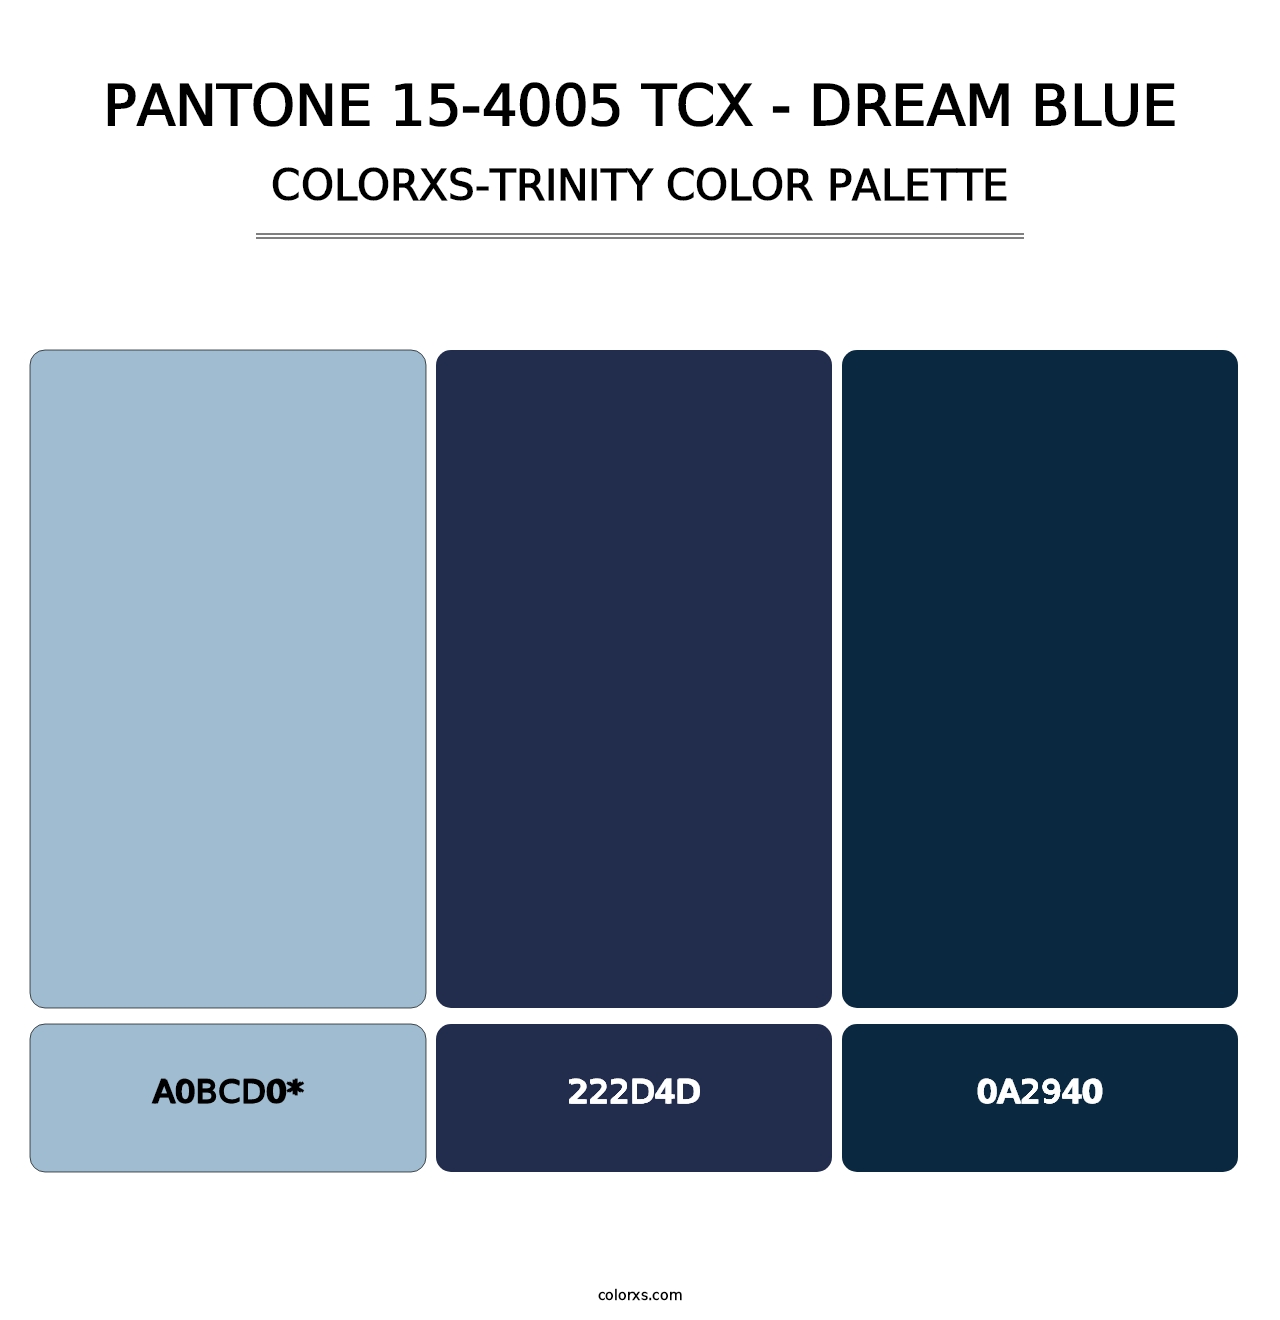 PANTONE 15-4005 TCX - Dream Blue - Colorxs Trinity Palette